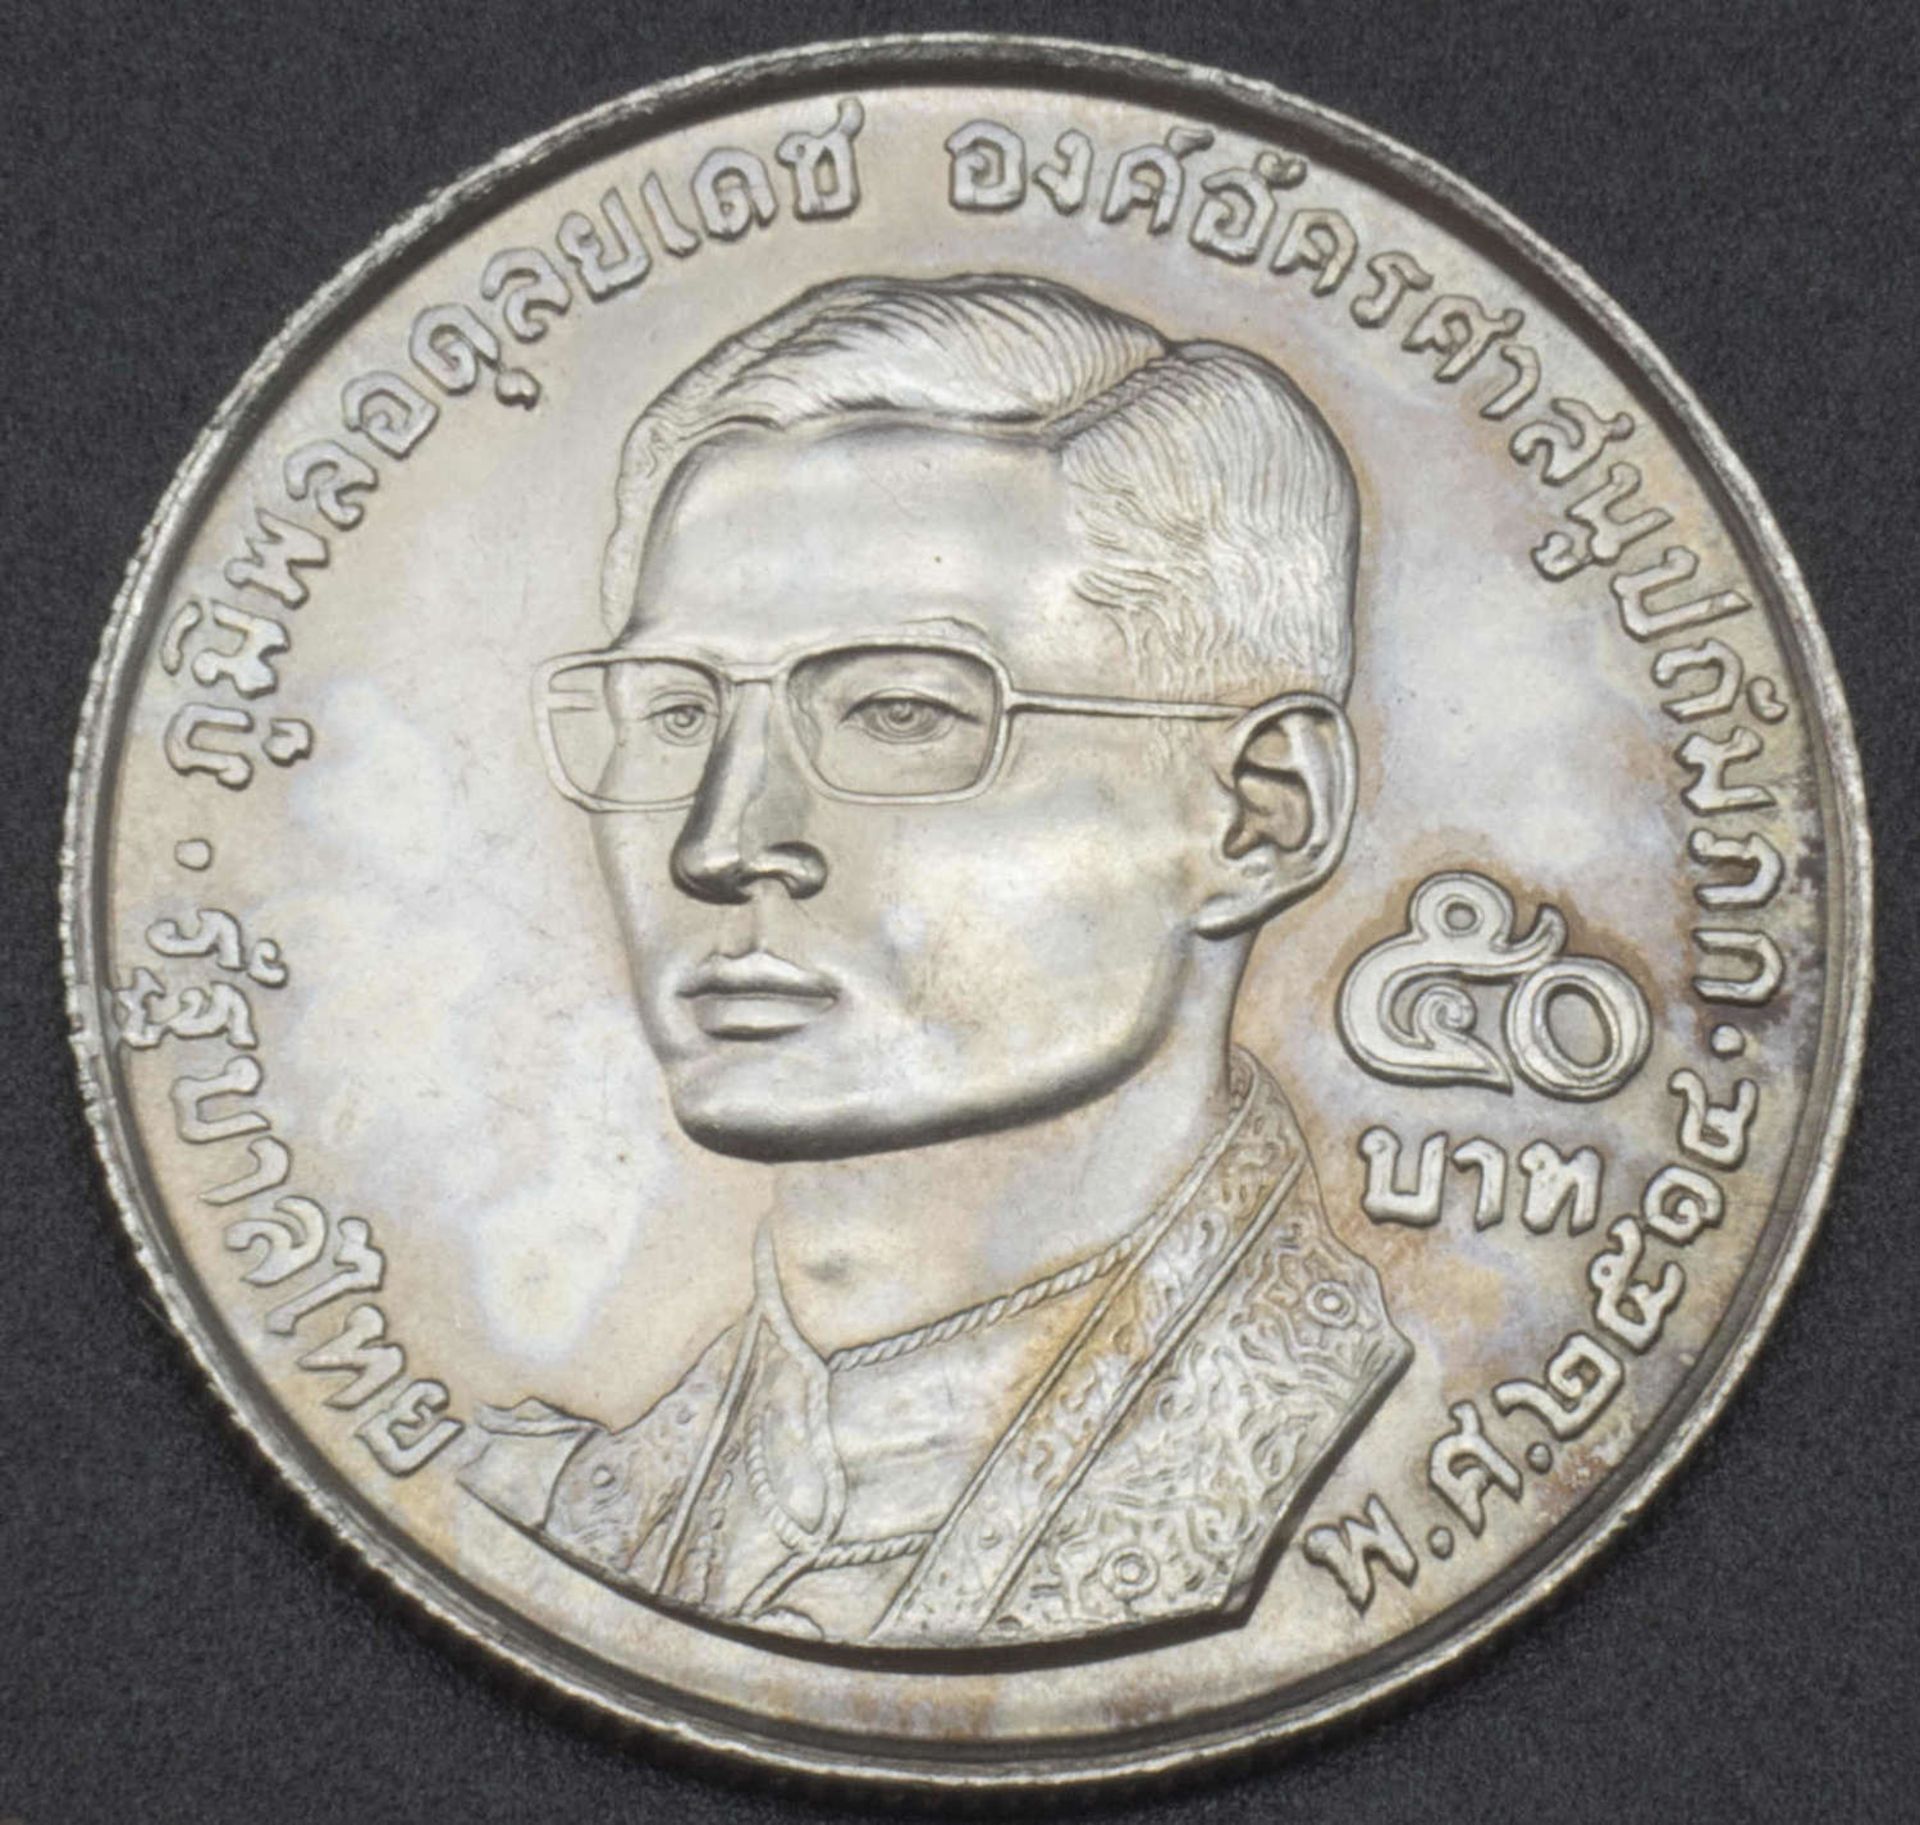 Silbermünze 50 Baht Thailand, BE 2493 - 2513 AD. 1971. sehr schönSilver coin 50 Baht Thailand, BE